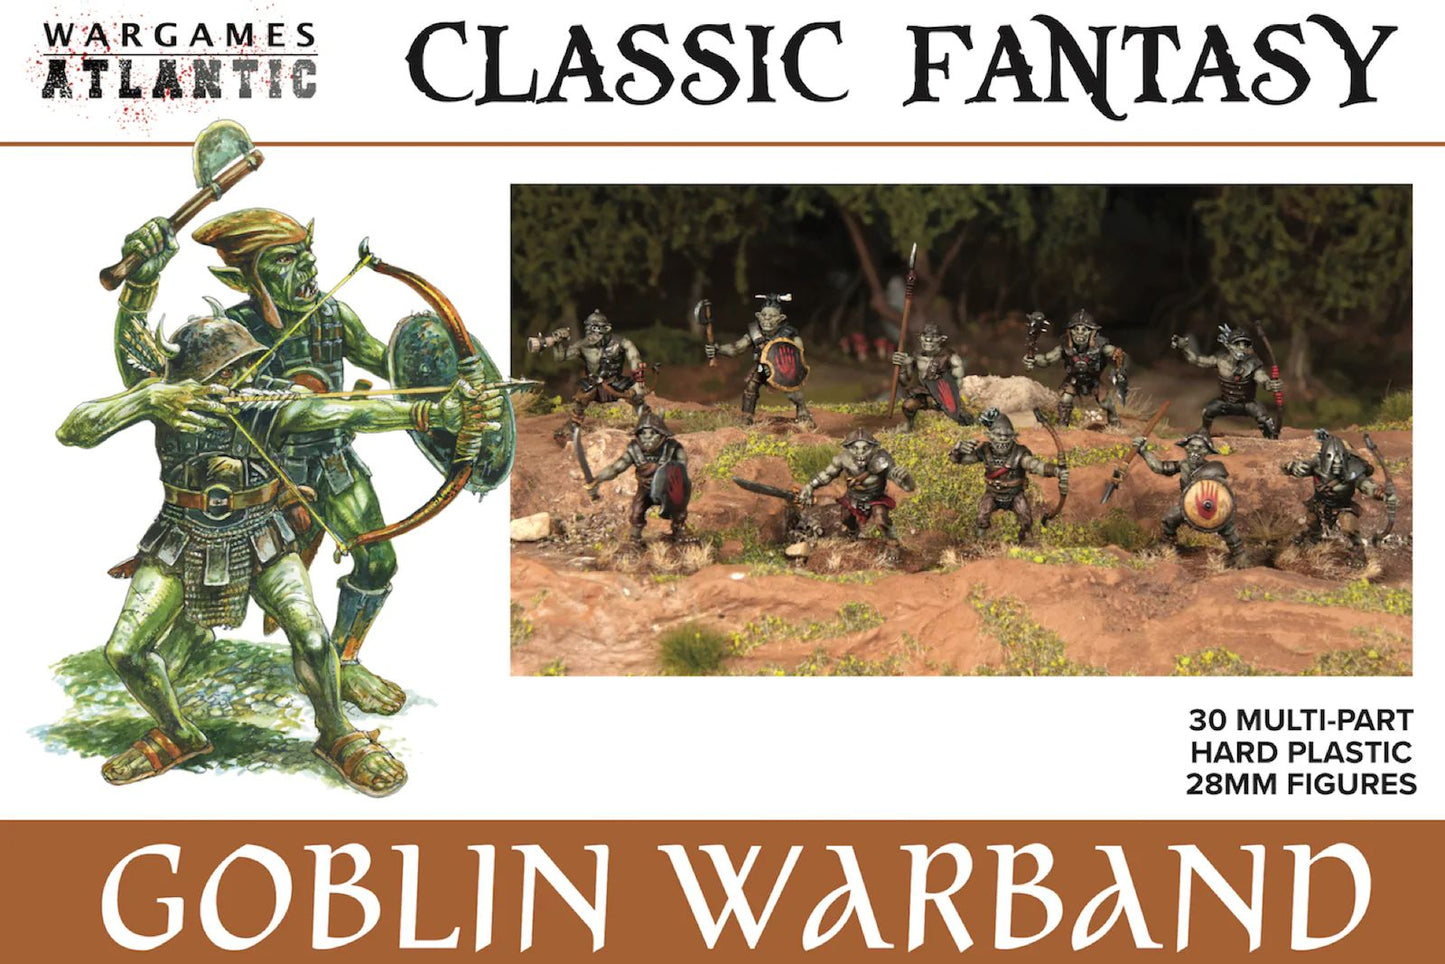 Wargames Atlantic WAACF004 Goblin Warband 28mm